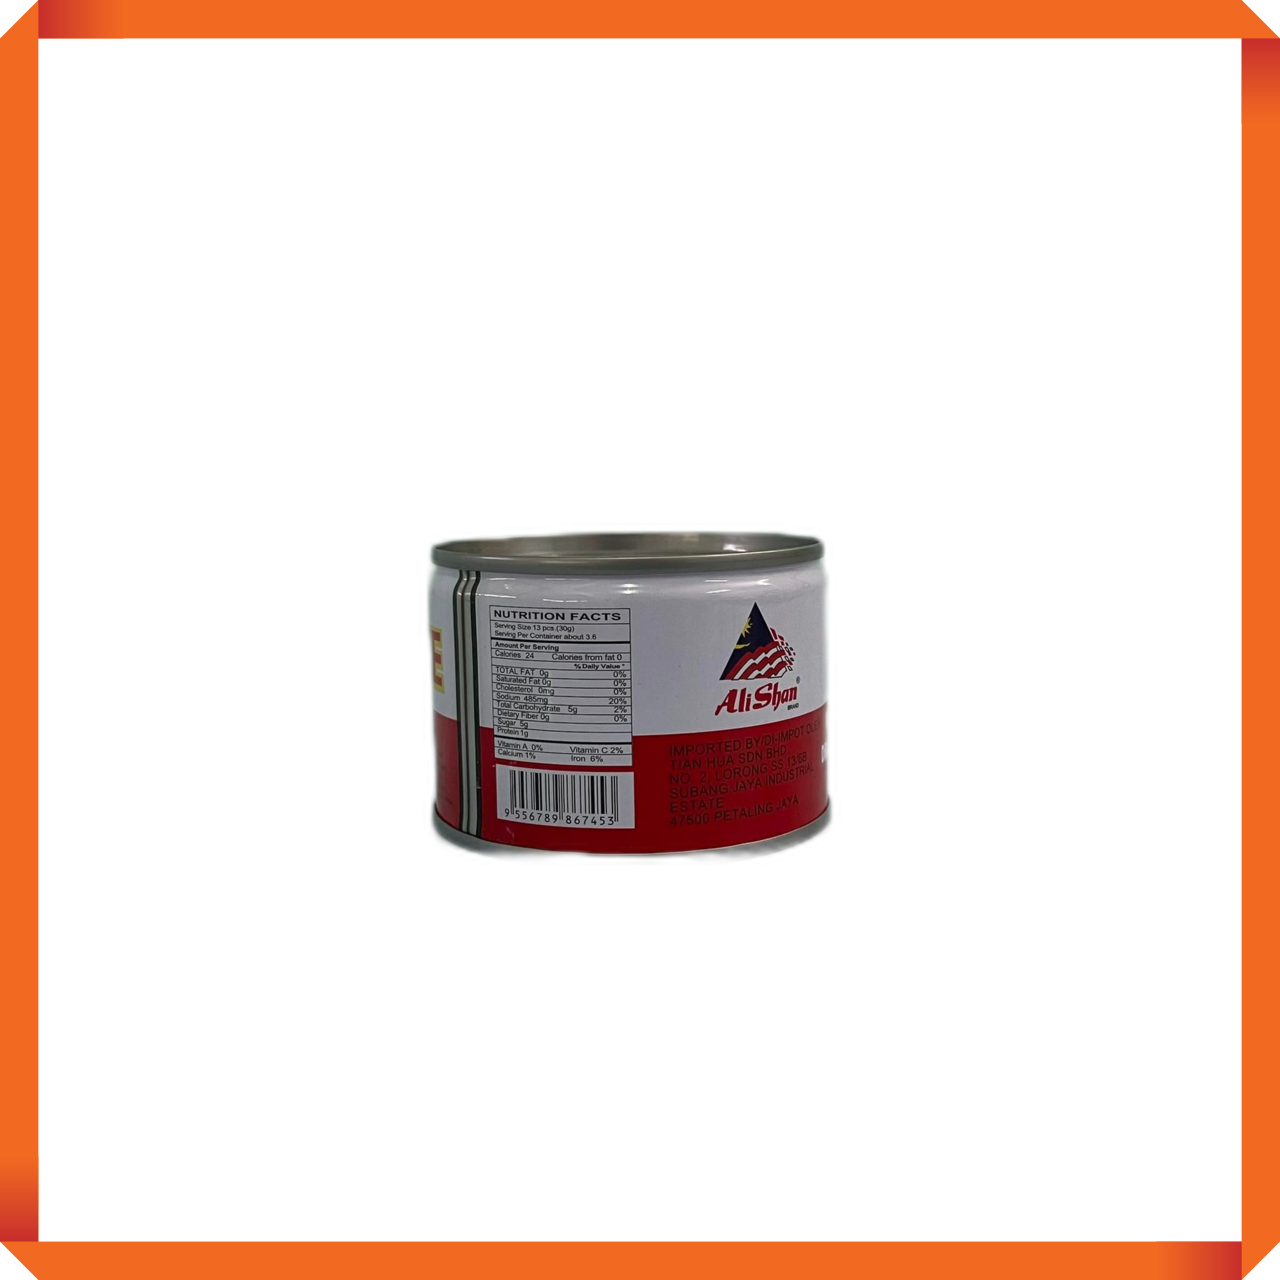 Ready Stock】(HALAL) AliShan BRAND Canned Pickled Lettuce ⭕ Acar Selada  Kaleng ⭕ 阿里山牌中国福建香菜心罐头（182g/tin）